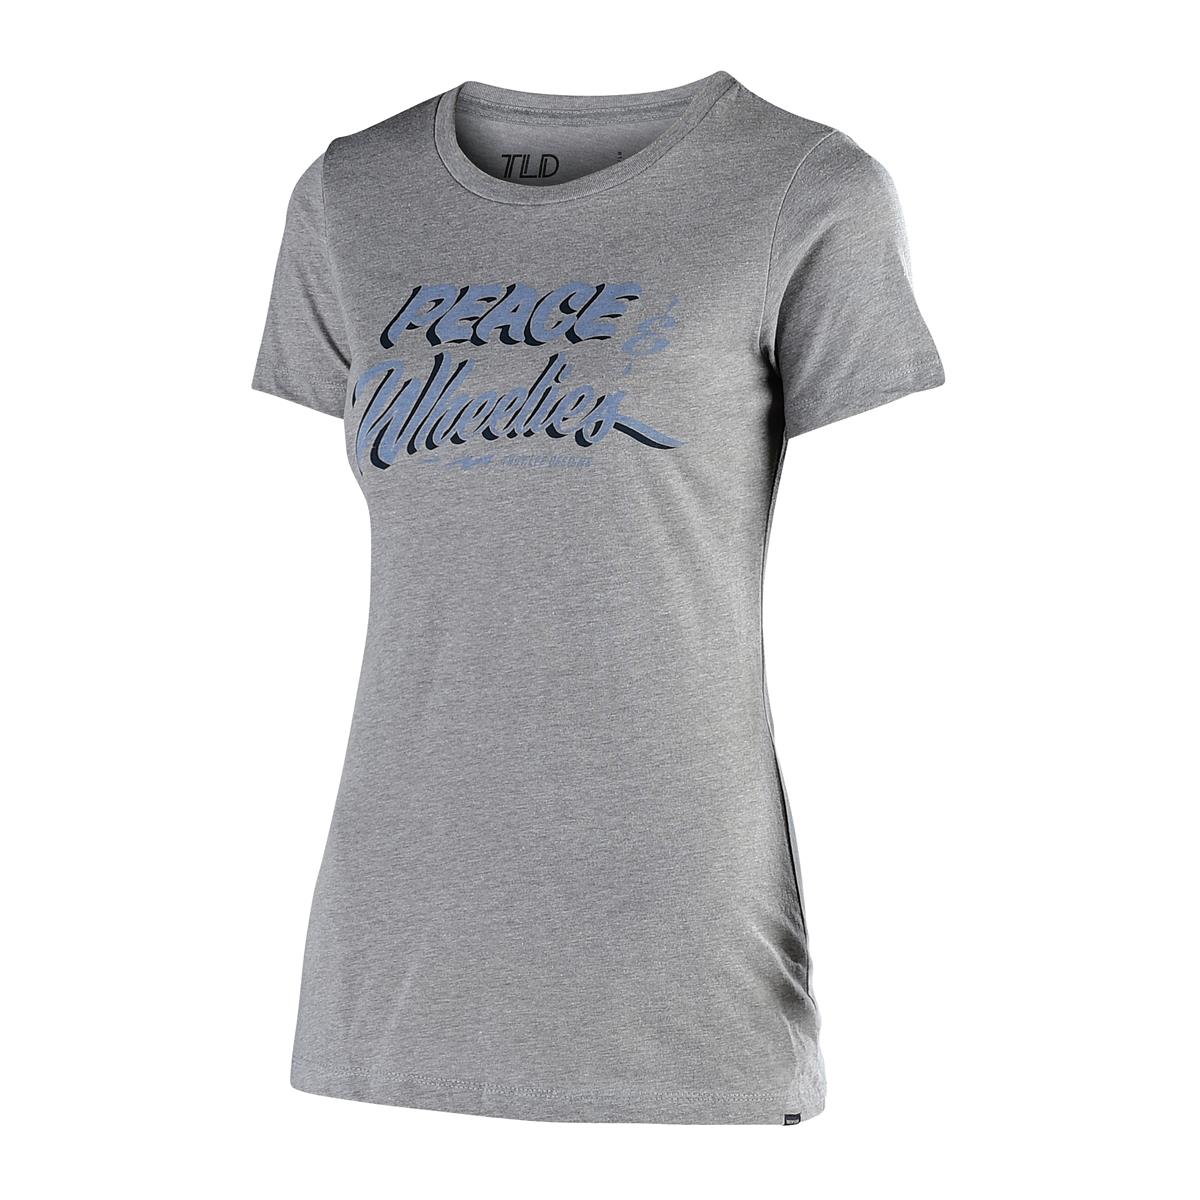 Troy Lee Designs Donna T-Shirt Peace & Wheelies Grigio Scuro Heather